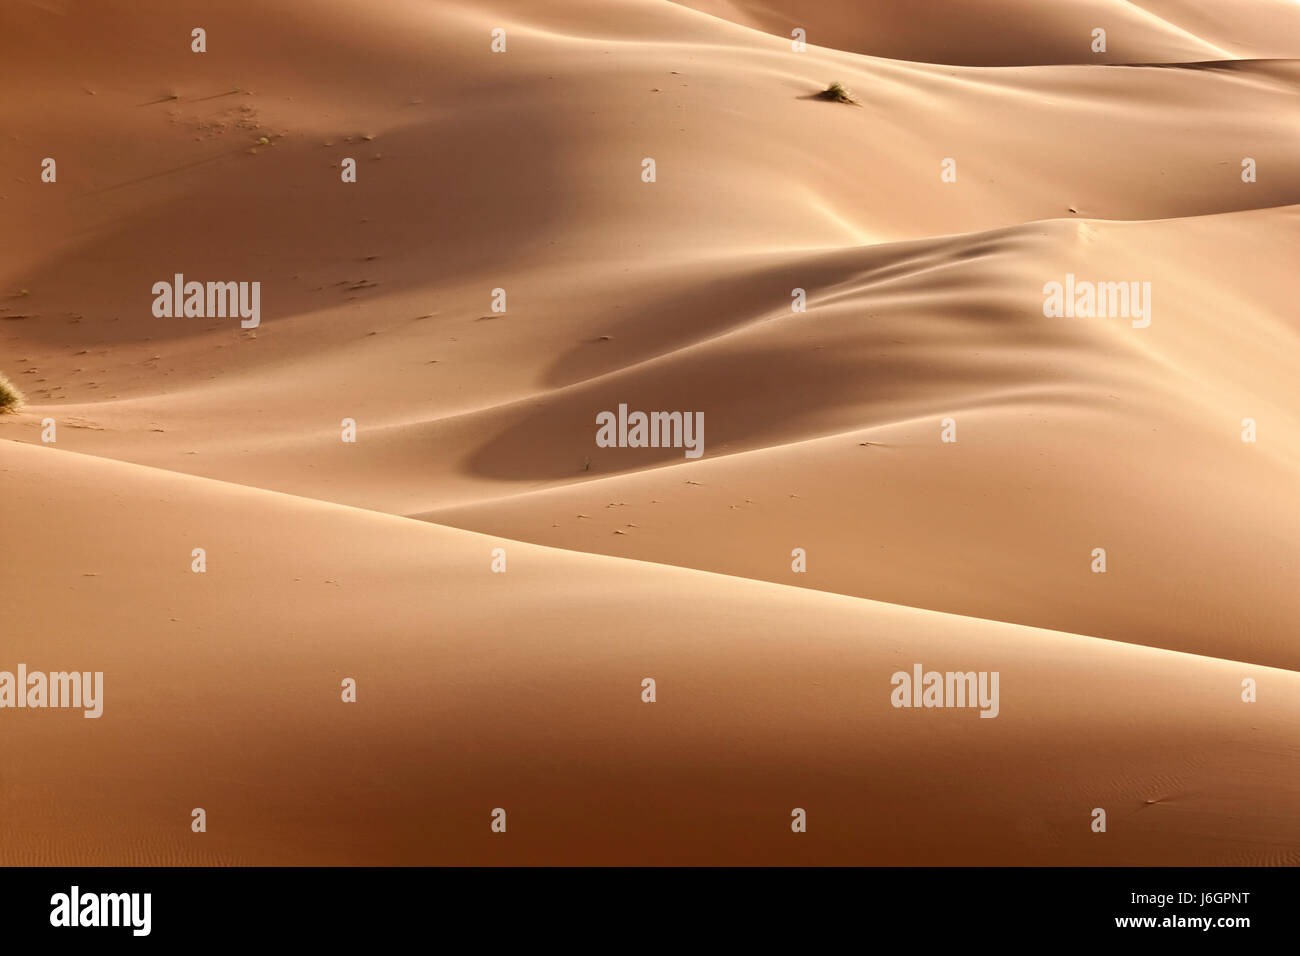 desert wasteland shape dune abstract design shaping formation model figure Stock Photo